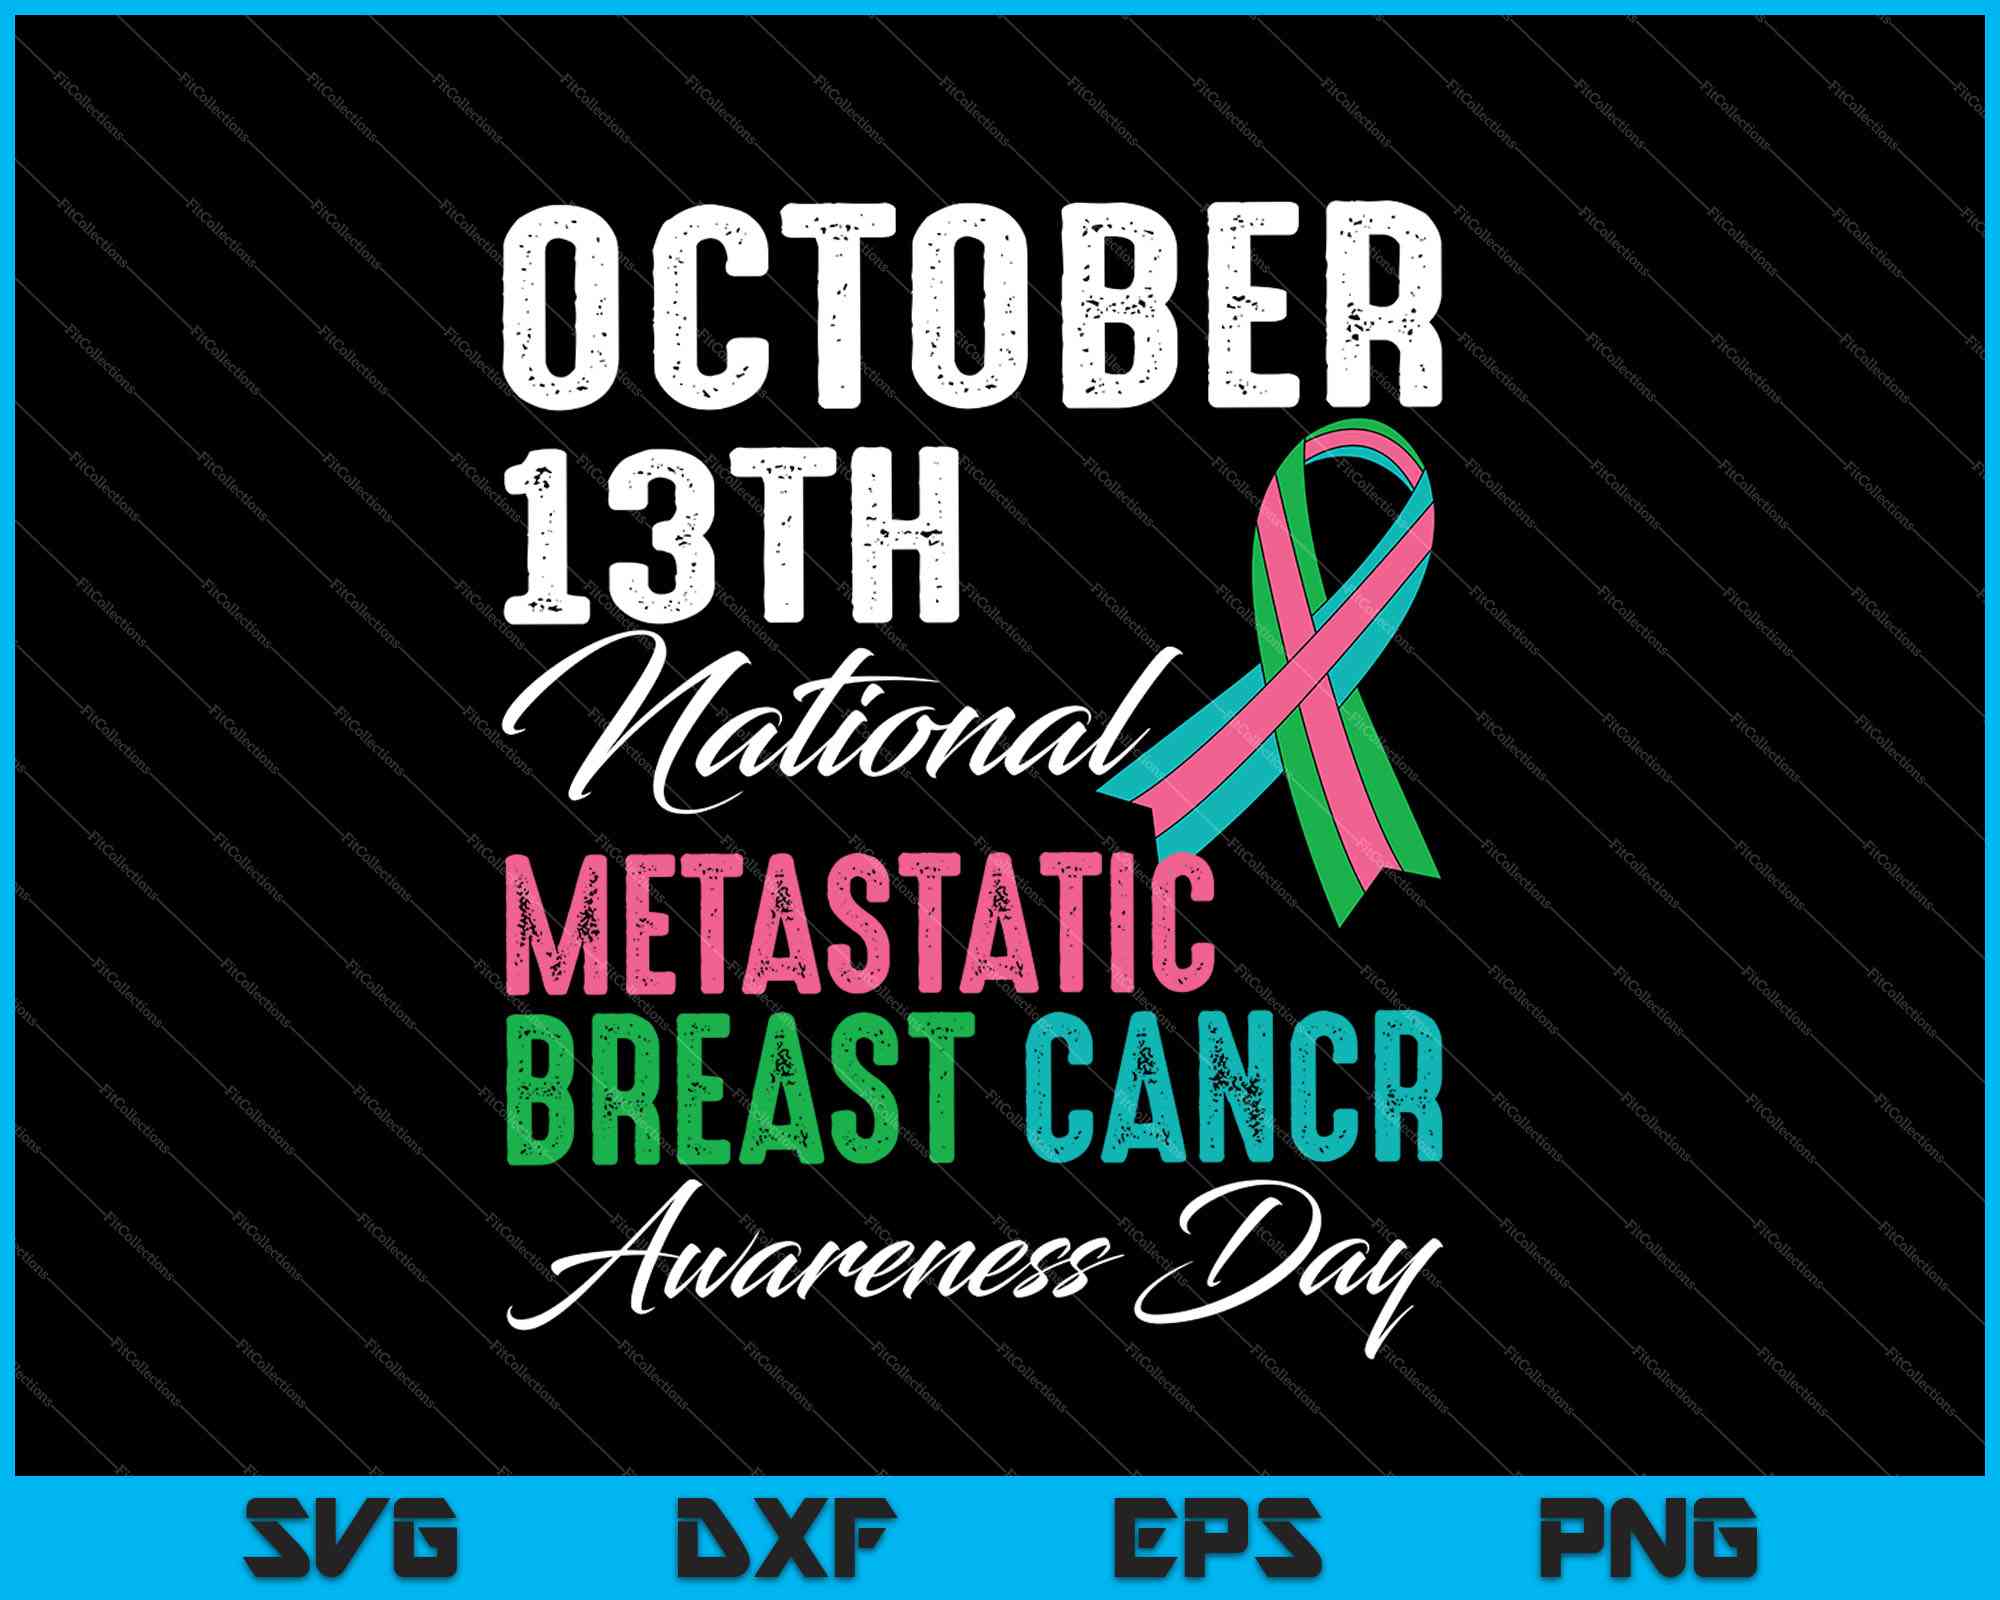 METASTATIC BREAST CANCER AWARENESS DAY - October 13 - National Day Calendar